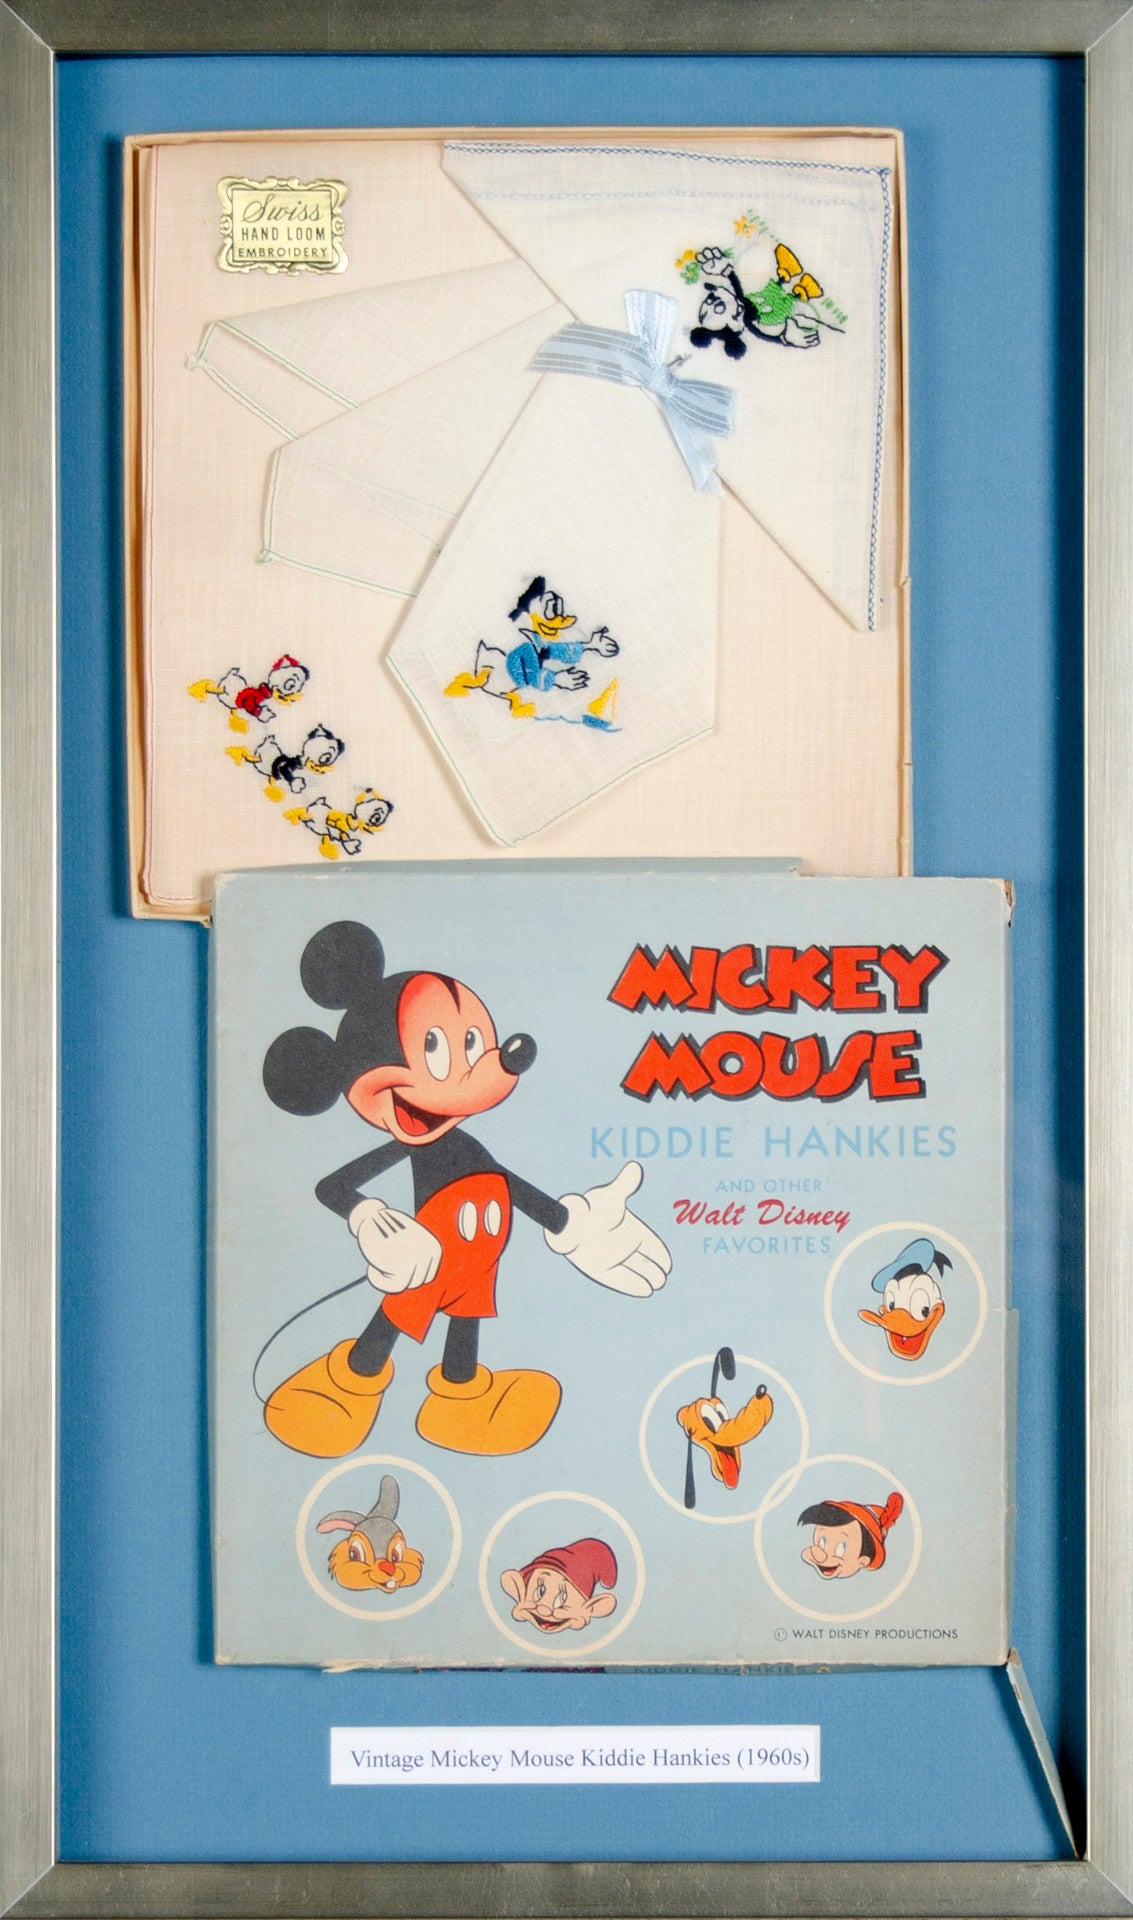 Vintage Mickey Mouse Kiddle Hankies (1960s)